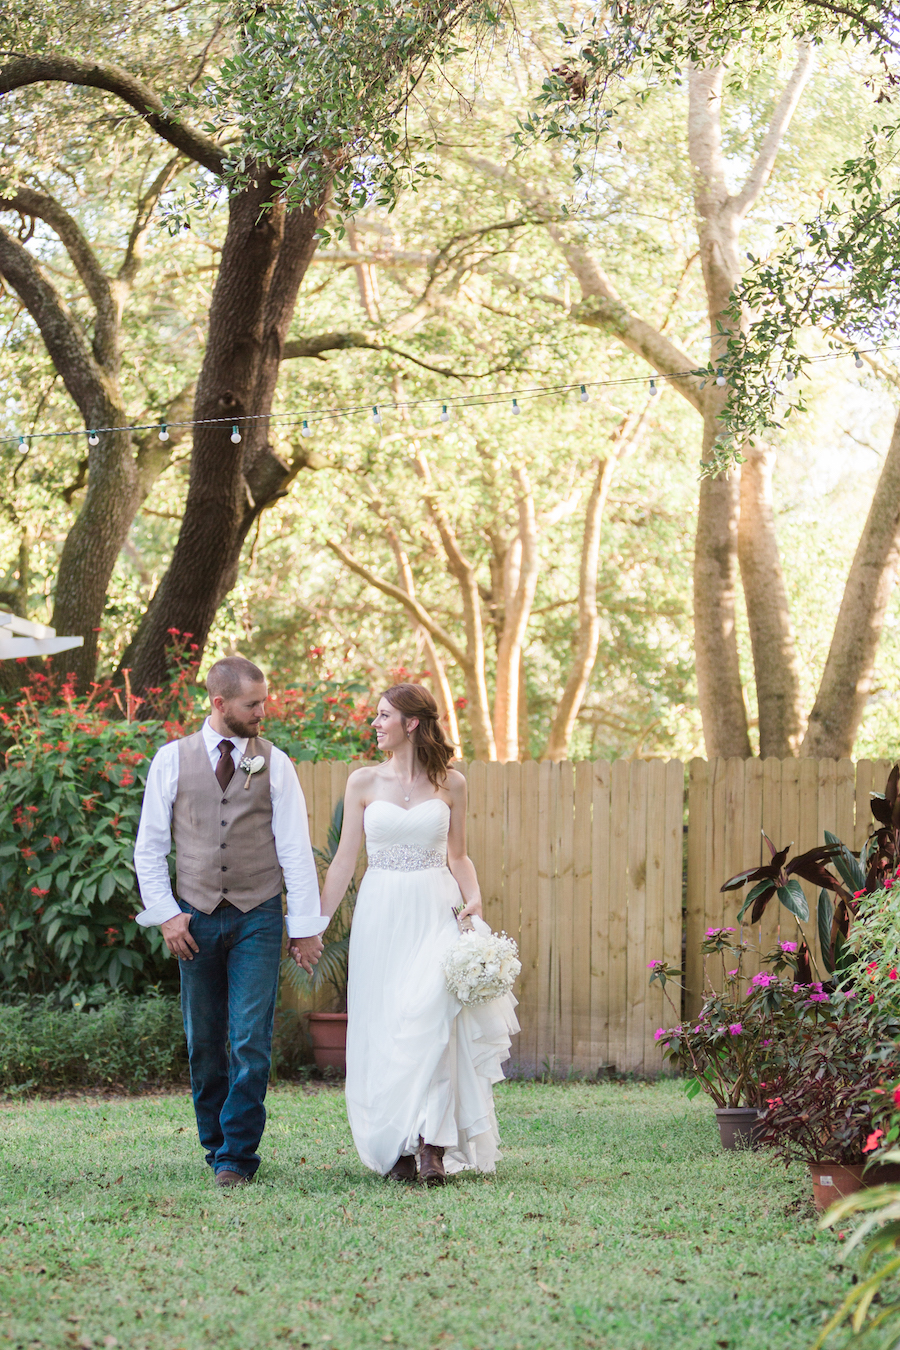 Tampa Bay Bride and Groom Outdoor Rustic Wedding Portrait | Tampa Bay Wedding Photographer Jillian Joseph Photography